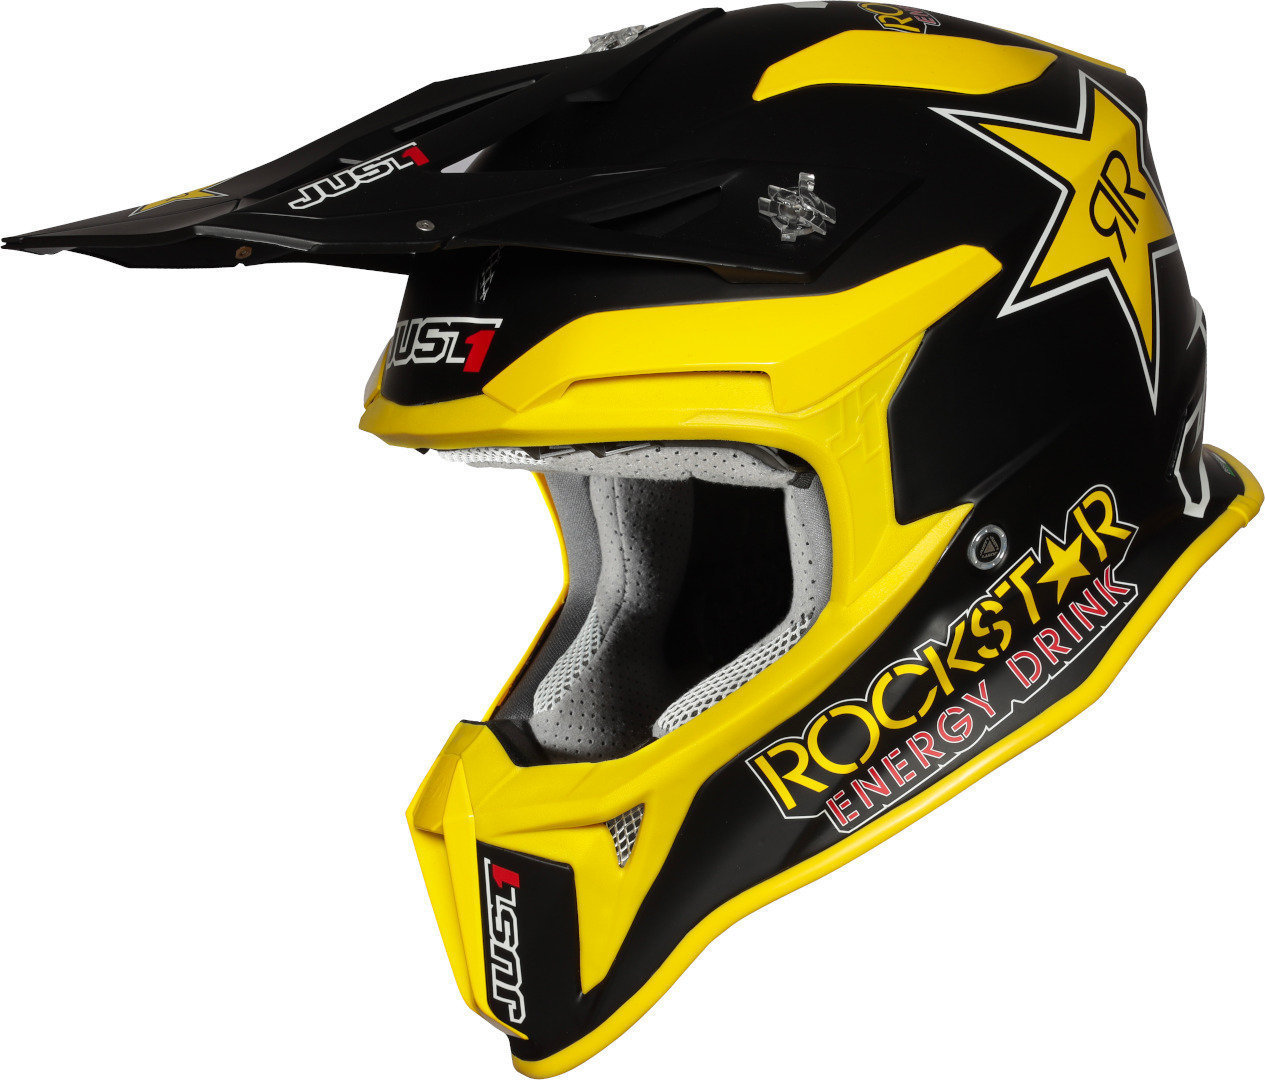 Just1 J18 Rockstar Motocross Helm, schwarz-gelb, Größe XS, schwarz-gelb, Größe XS